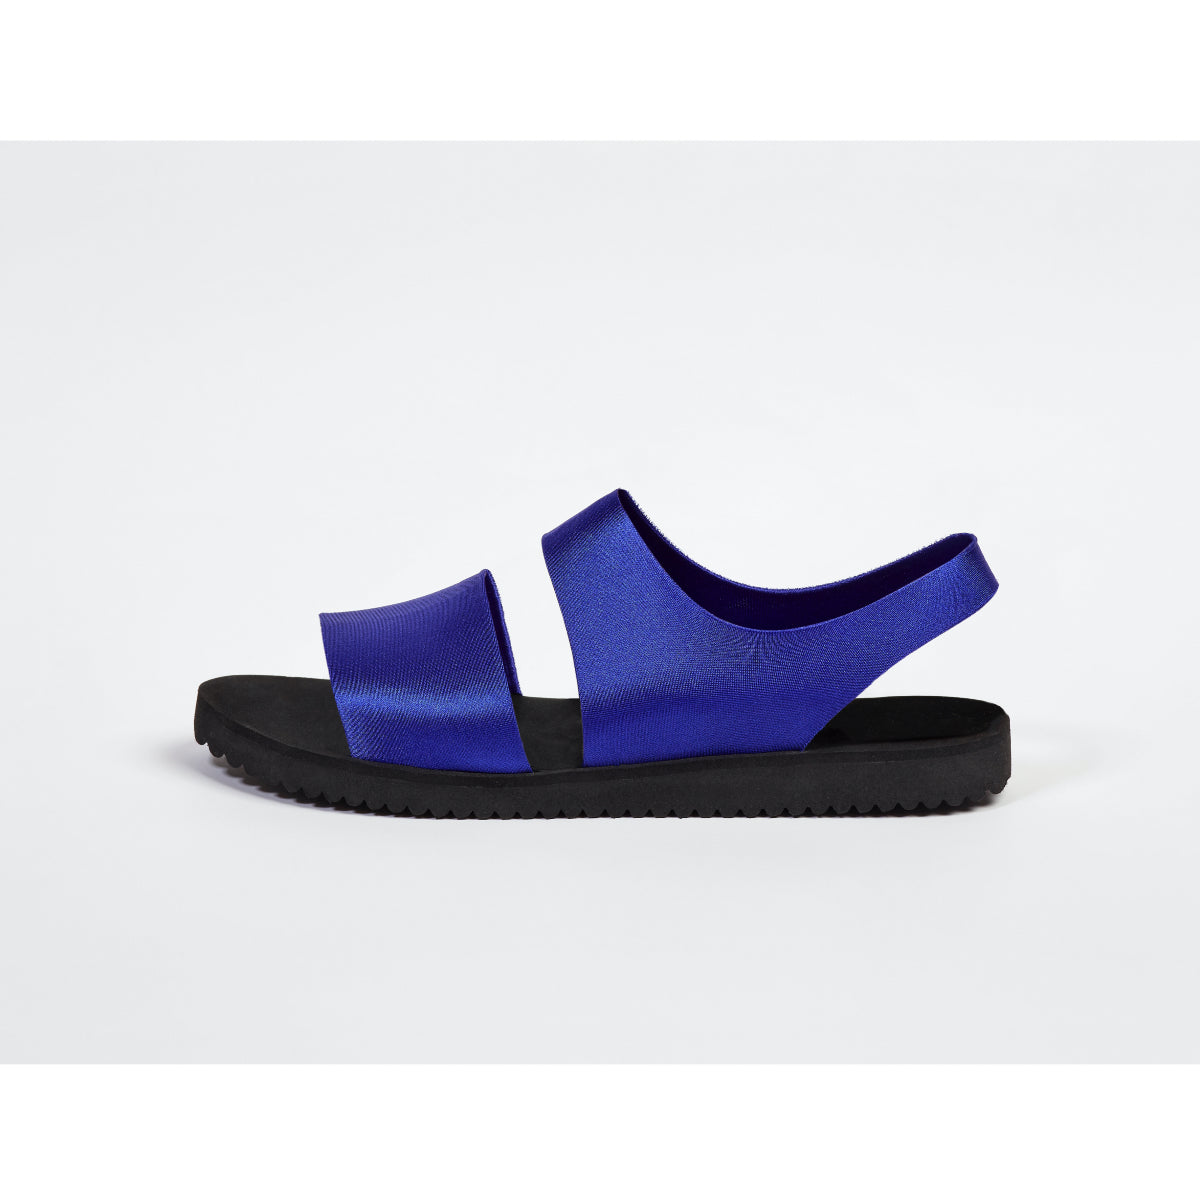  Sandals Deep Blue two-piece